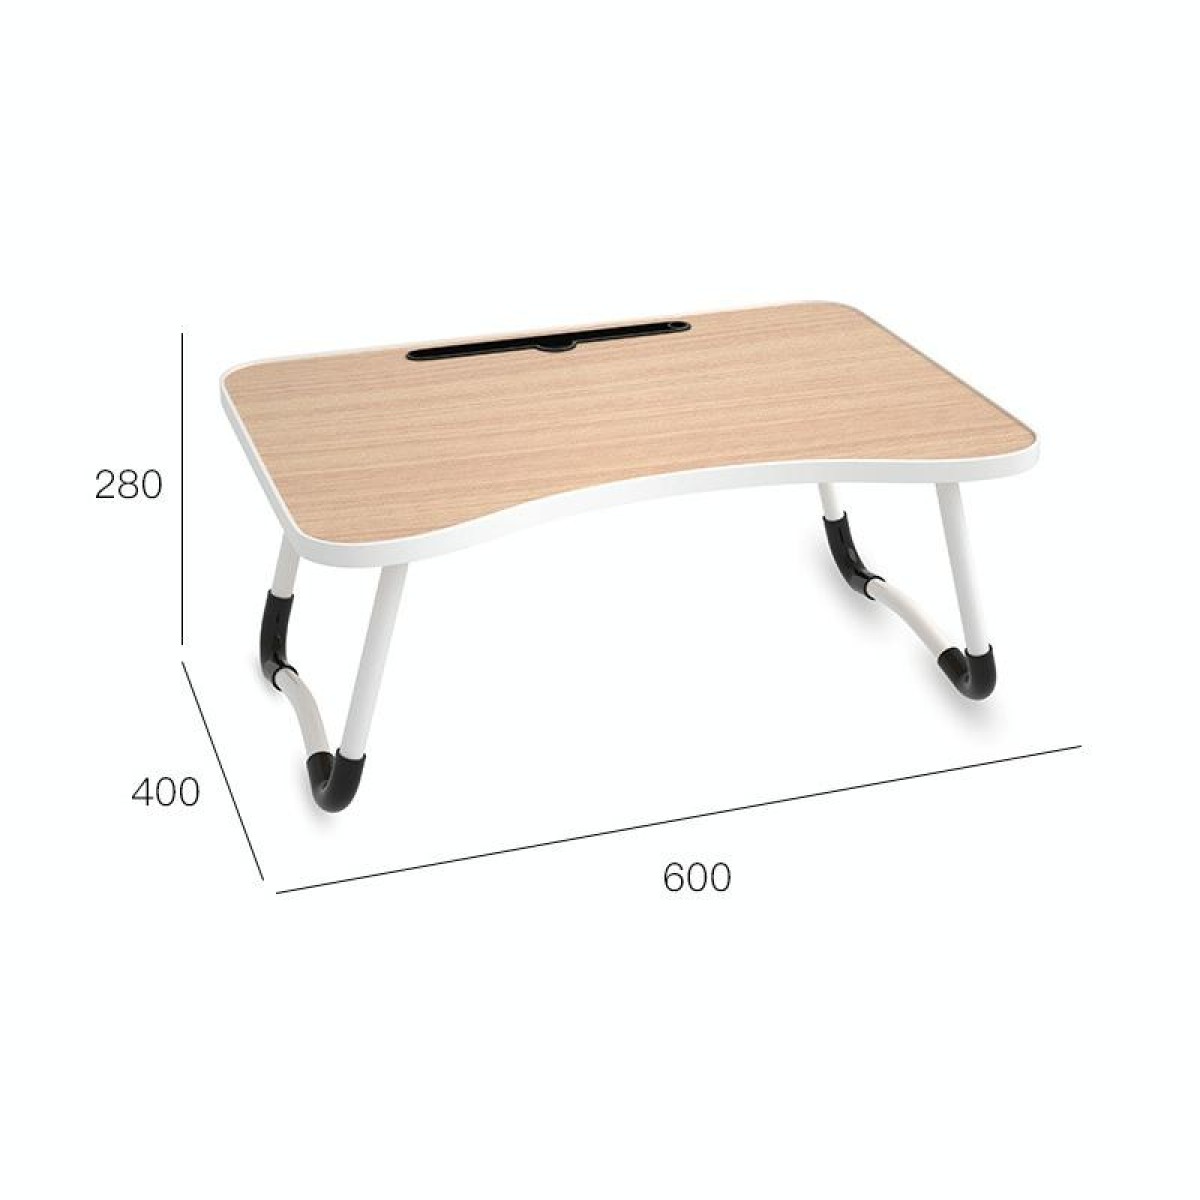 W-shaped Non-slip Legs Adjustable Folding Portable Laptop Desk without Card Slot(Black)